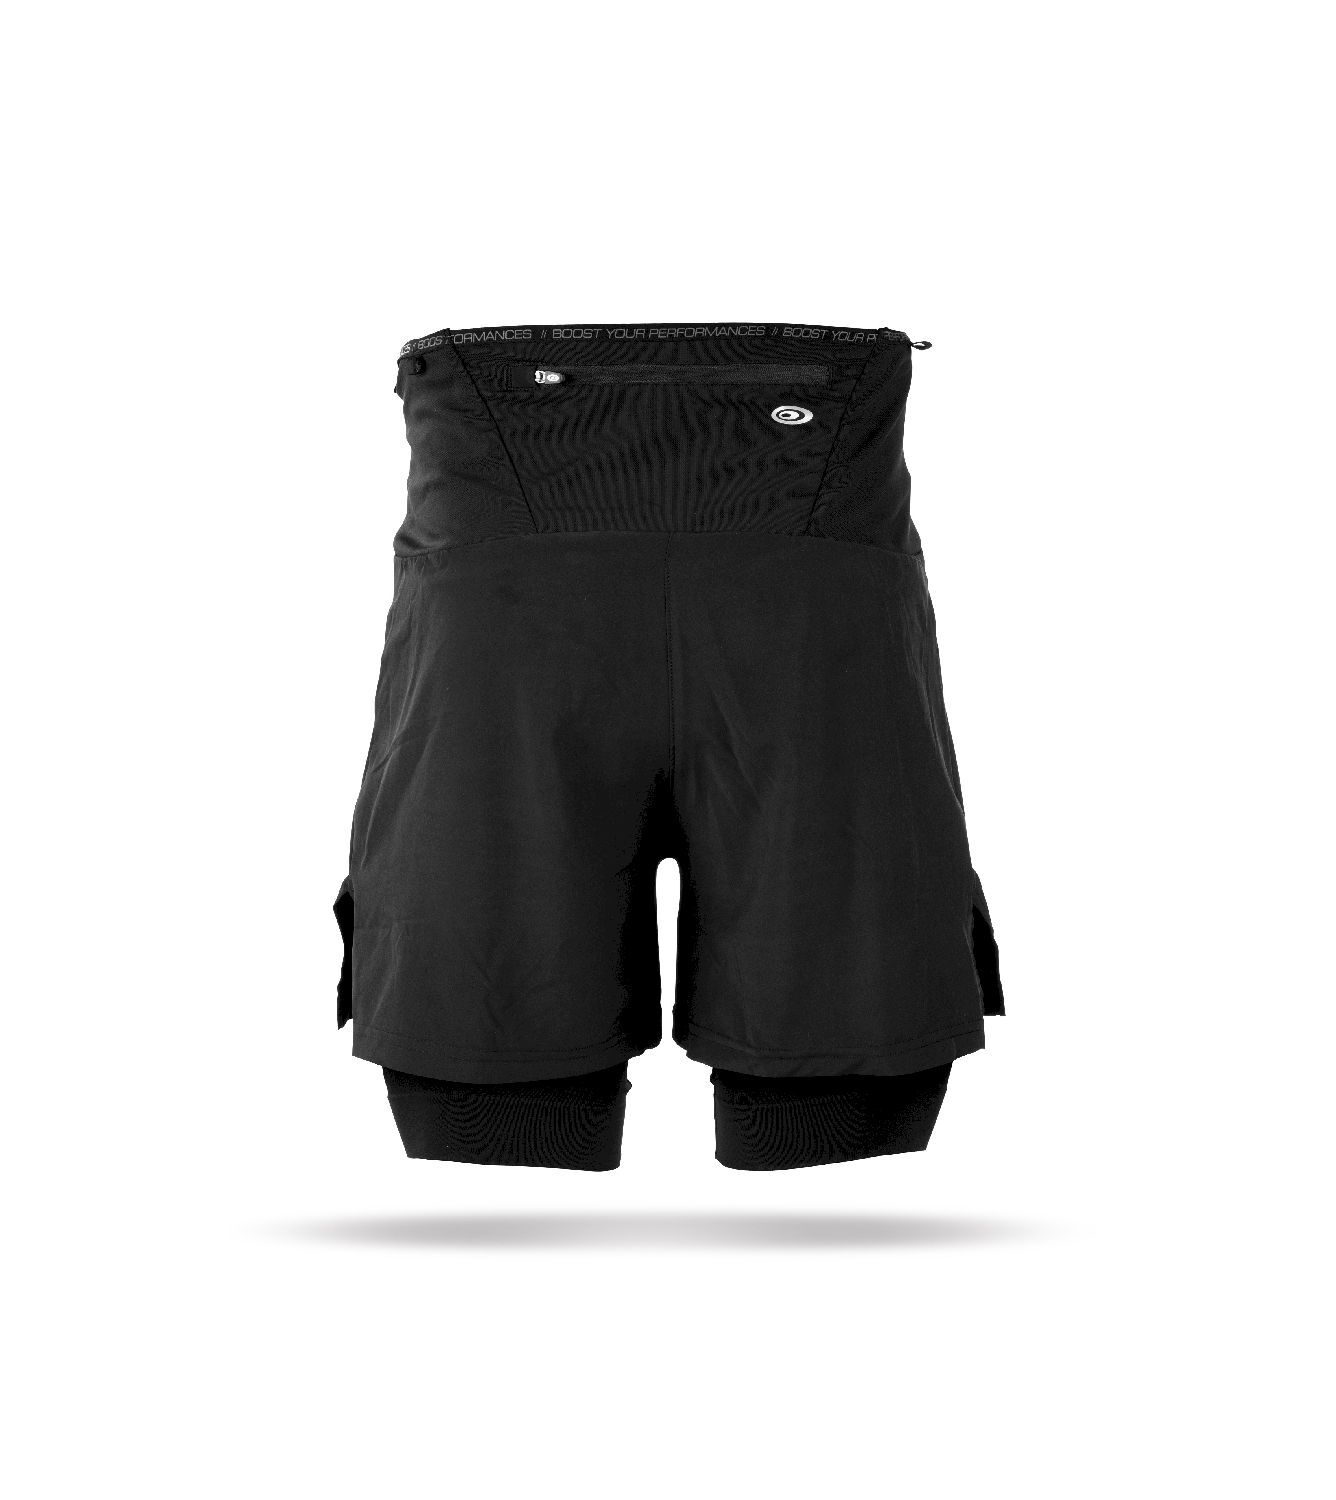 BV Sport CSX Evo2 Combo - Running shorts - Men's